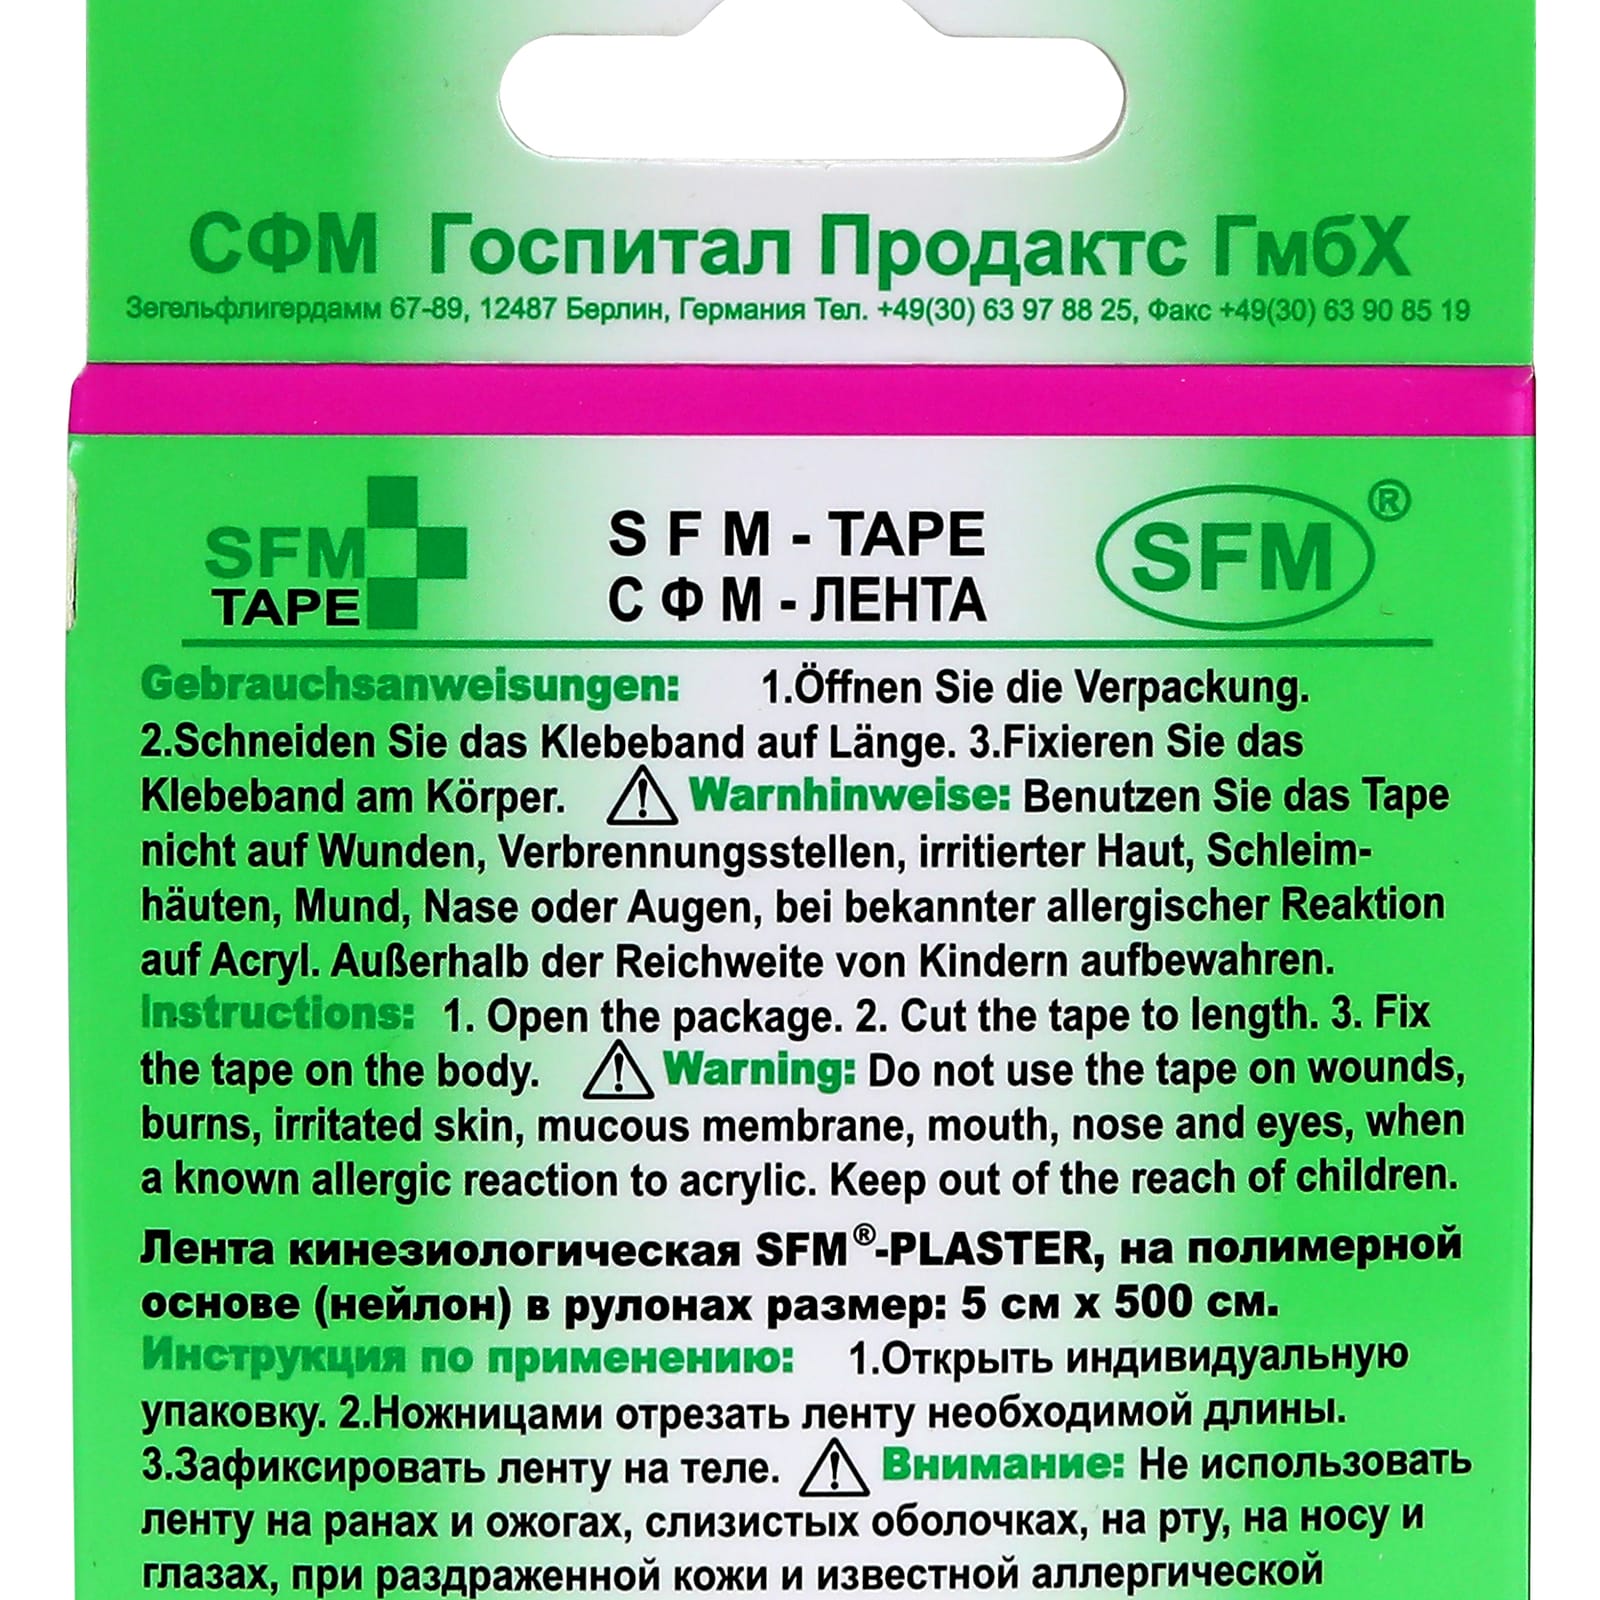 Кинезиотейп SFM Hospital Products Plaster на полимерной основе 5х500 см розового цвета в диспенсере - фото 3